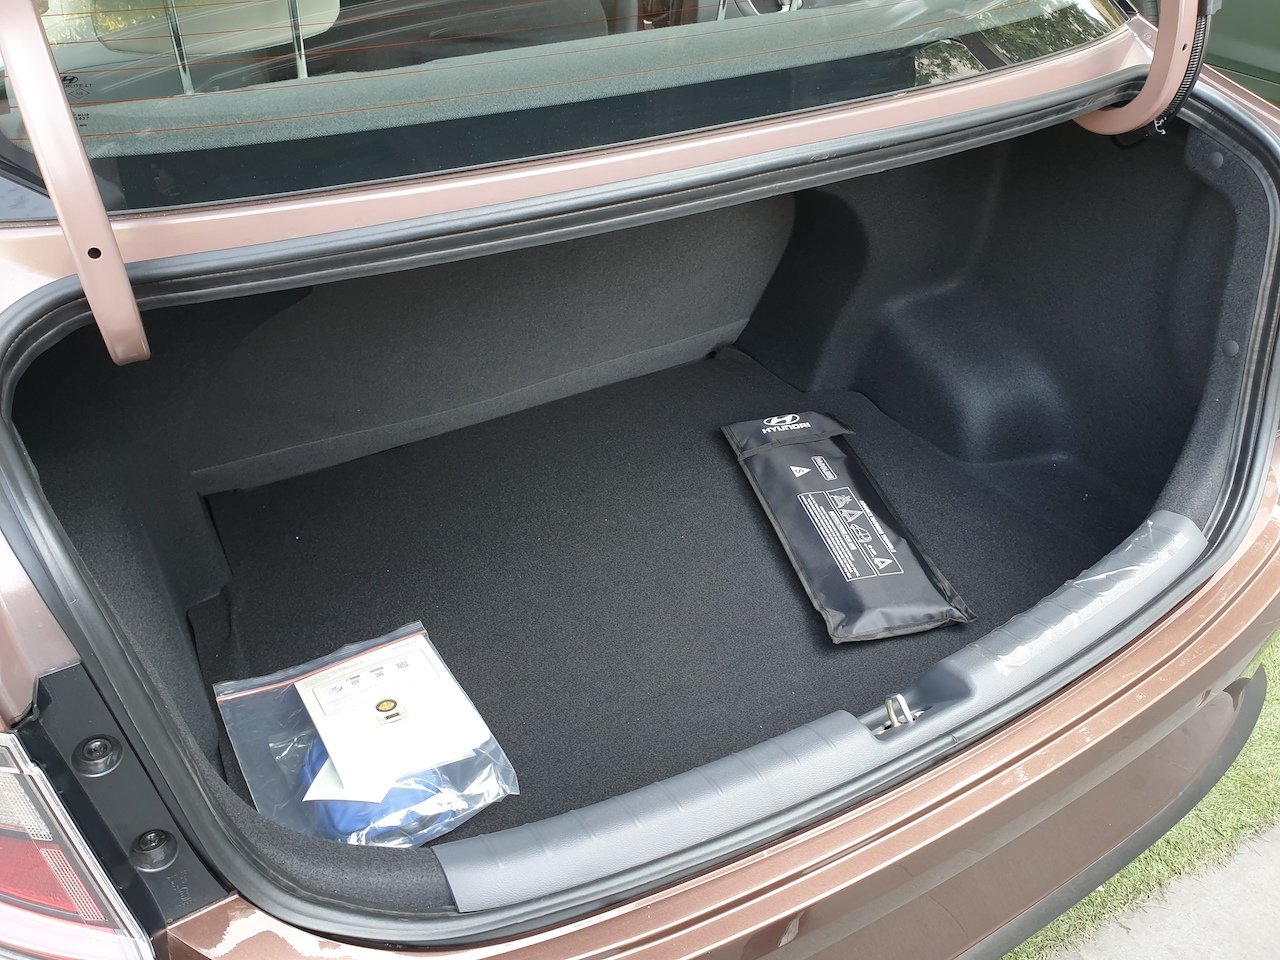 2020 Hyundai Aura interior boot space